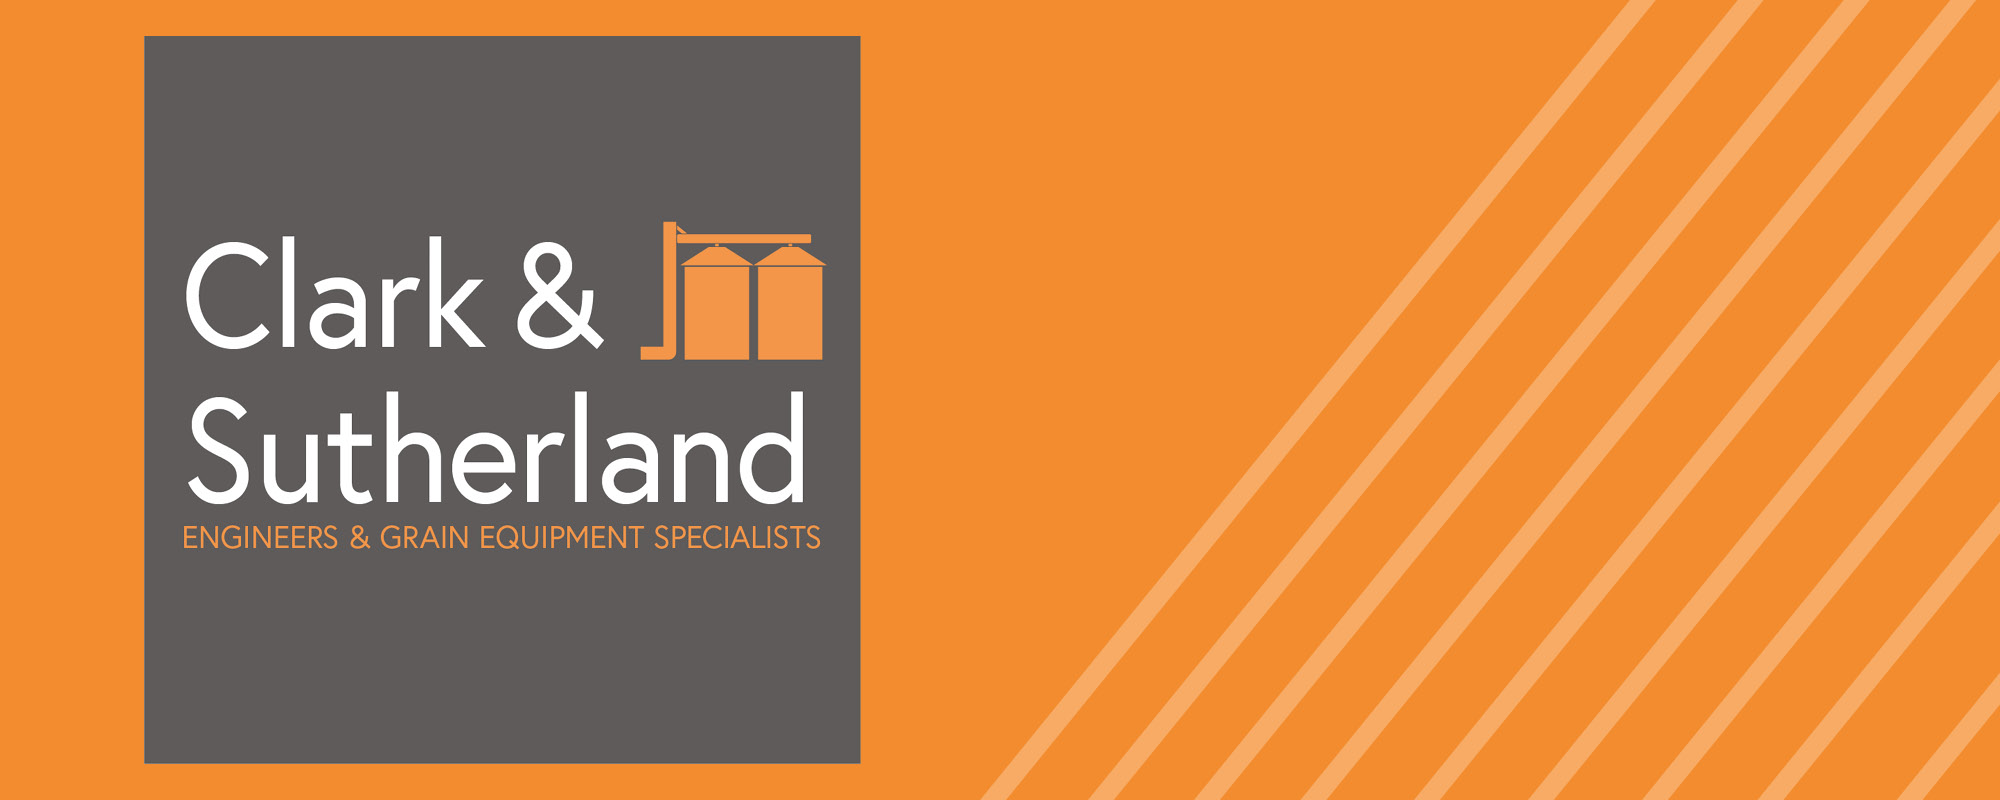 Our new look! Clark & Sutherland new logo on orange background